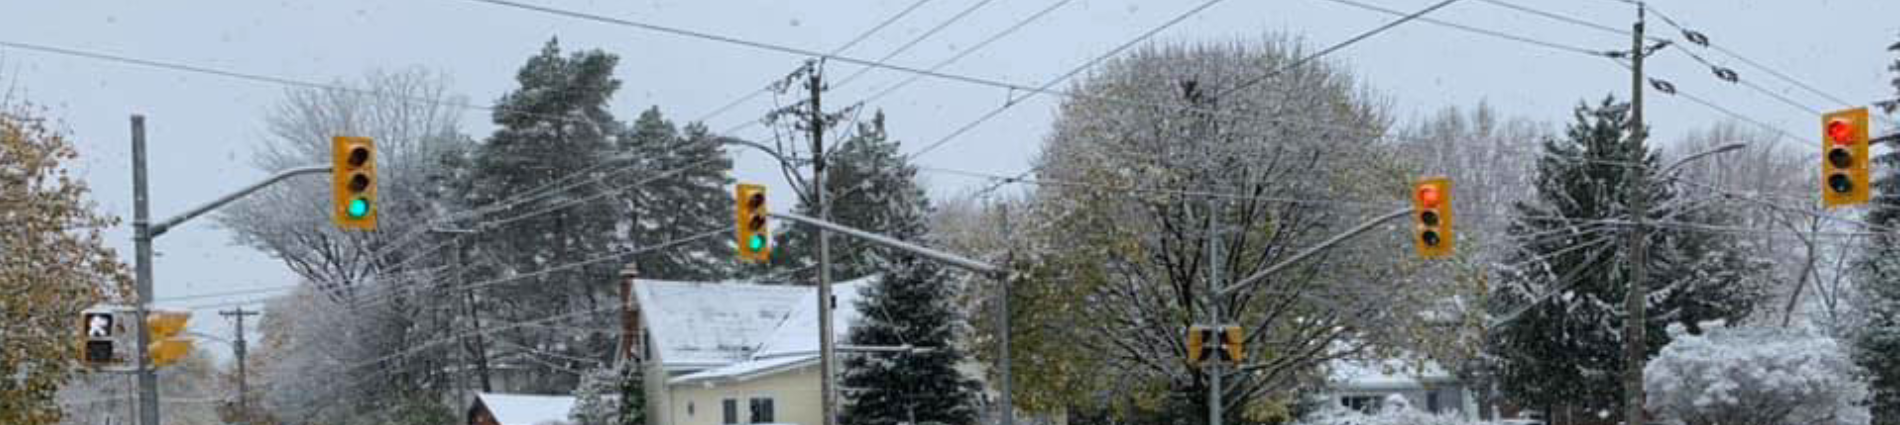 Photo of traffic lights